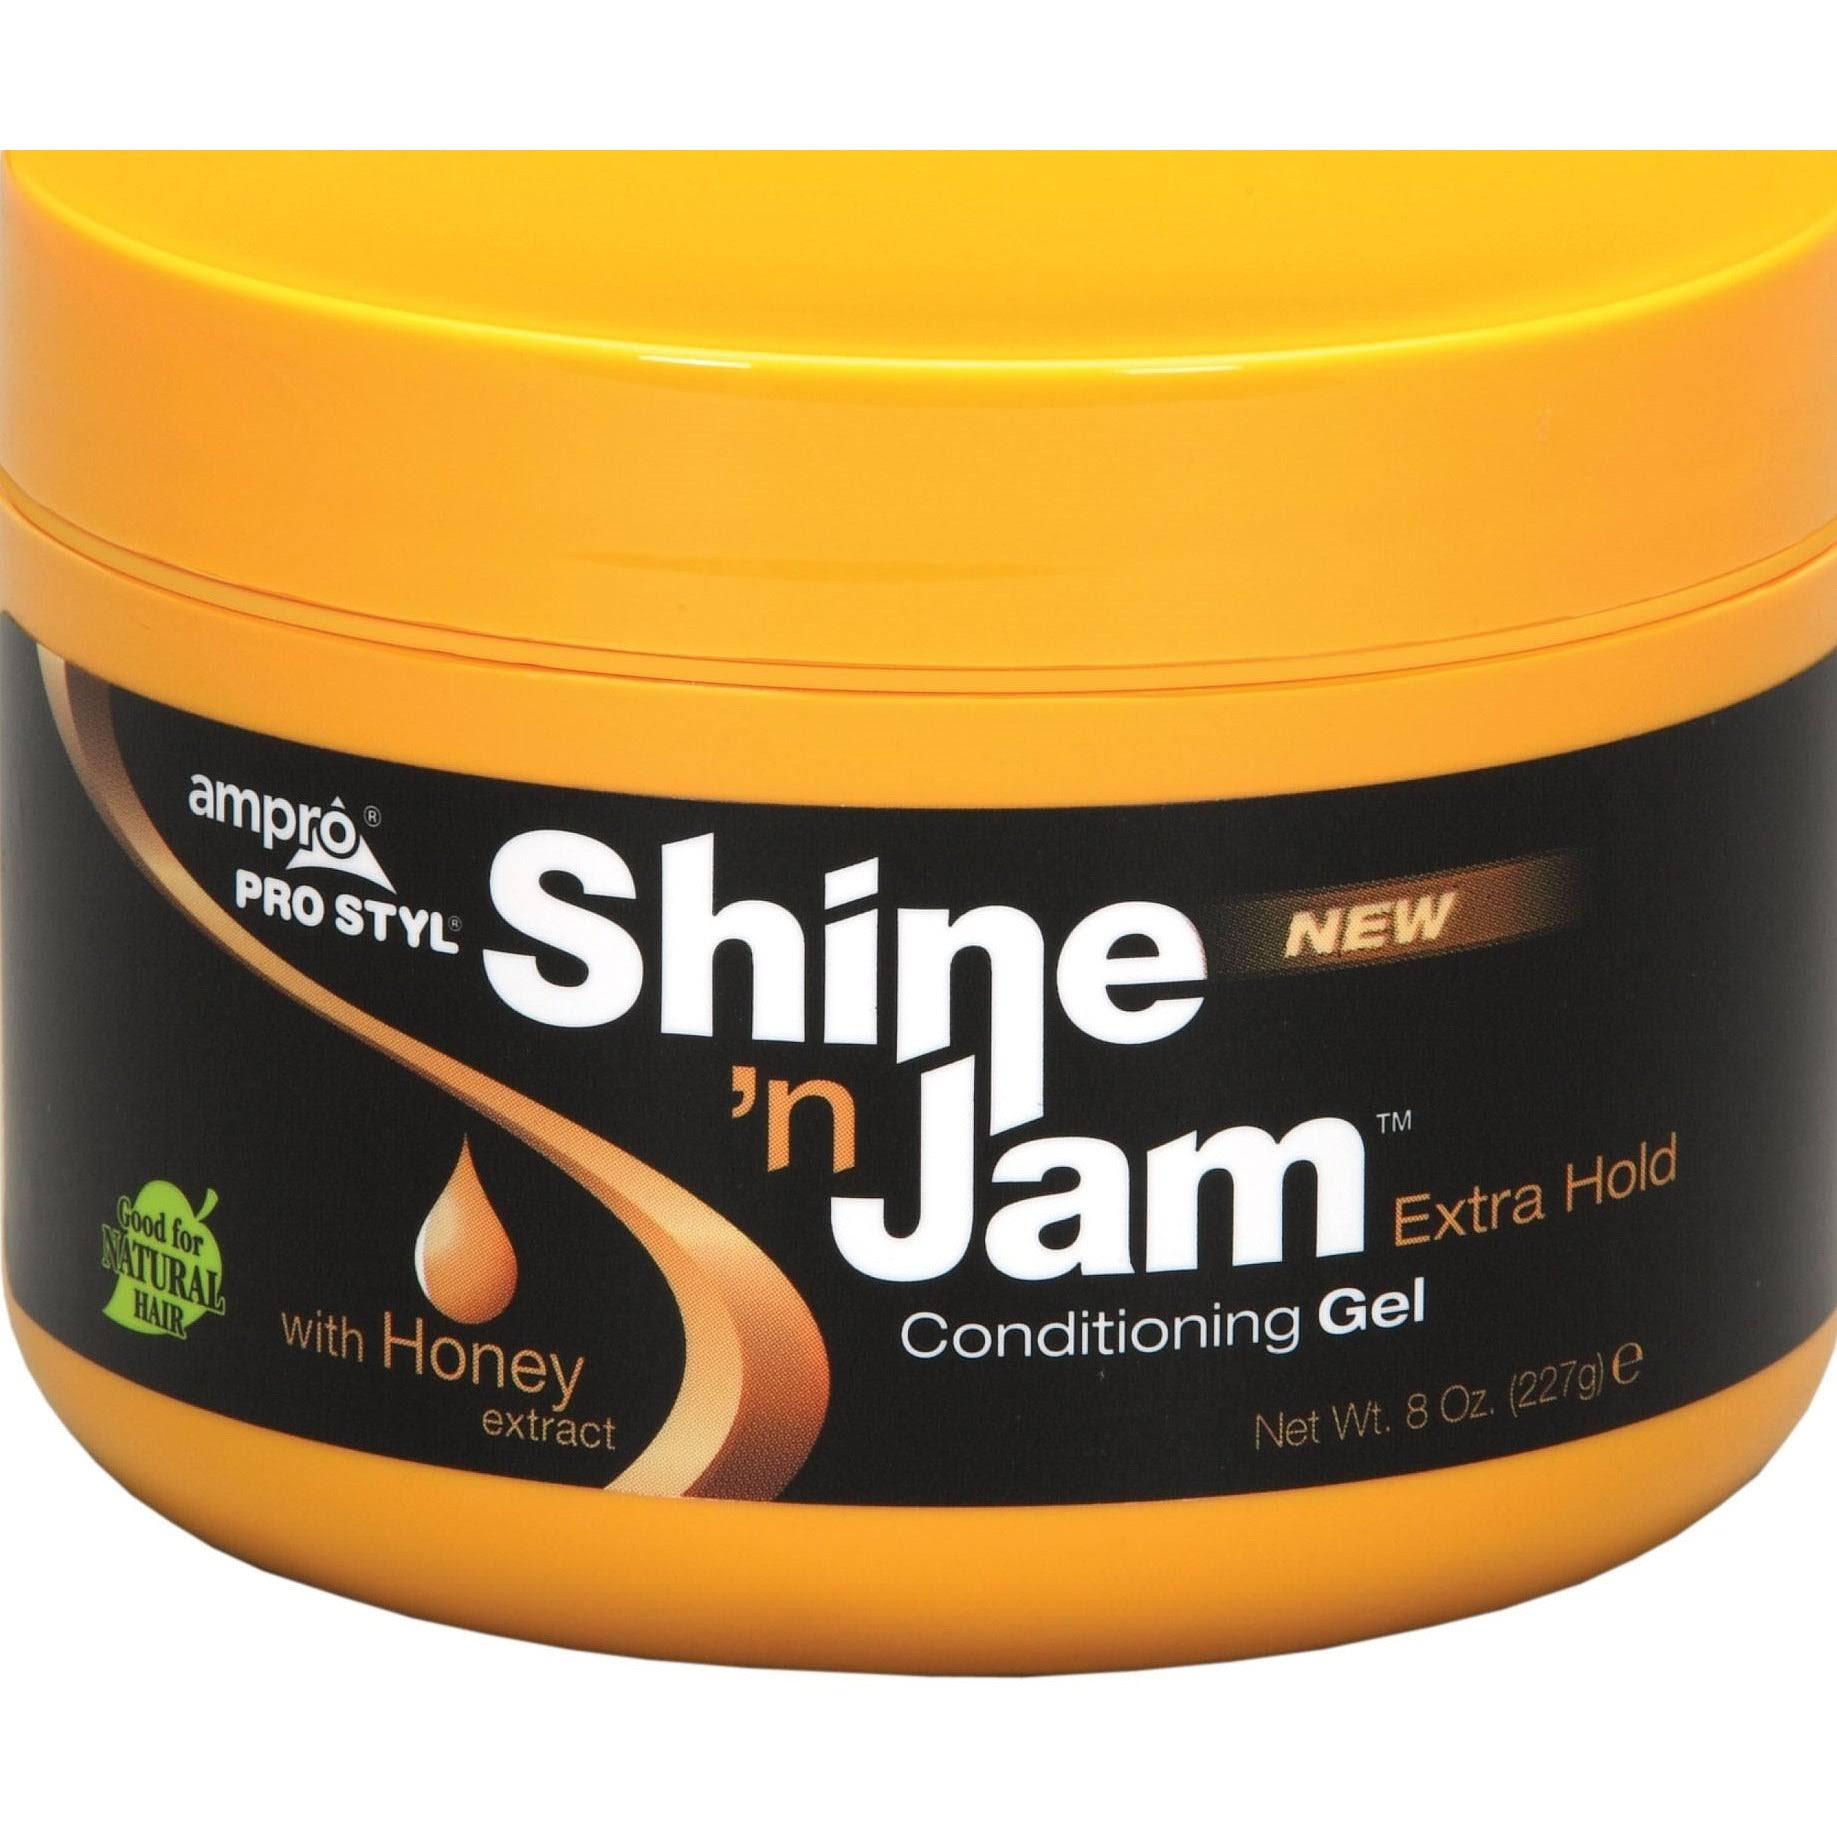 Shine 'n Jam Extra Hold Conditioning Gel - 8oz